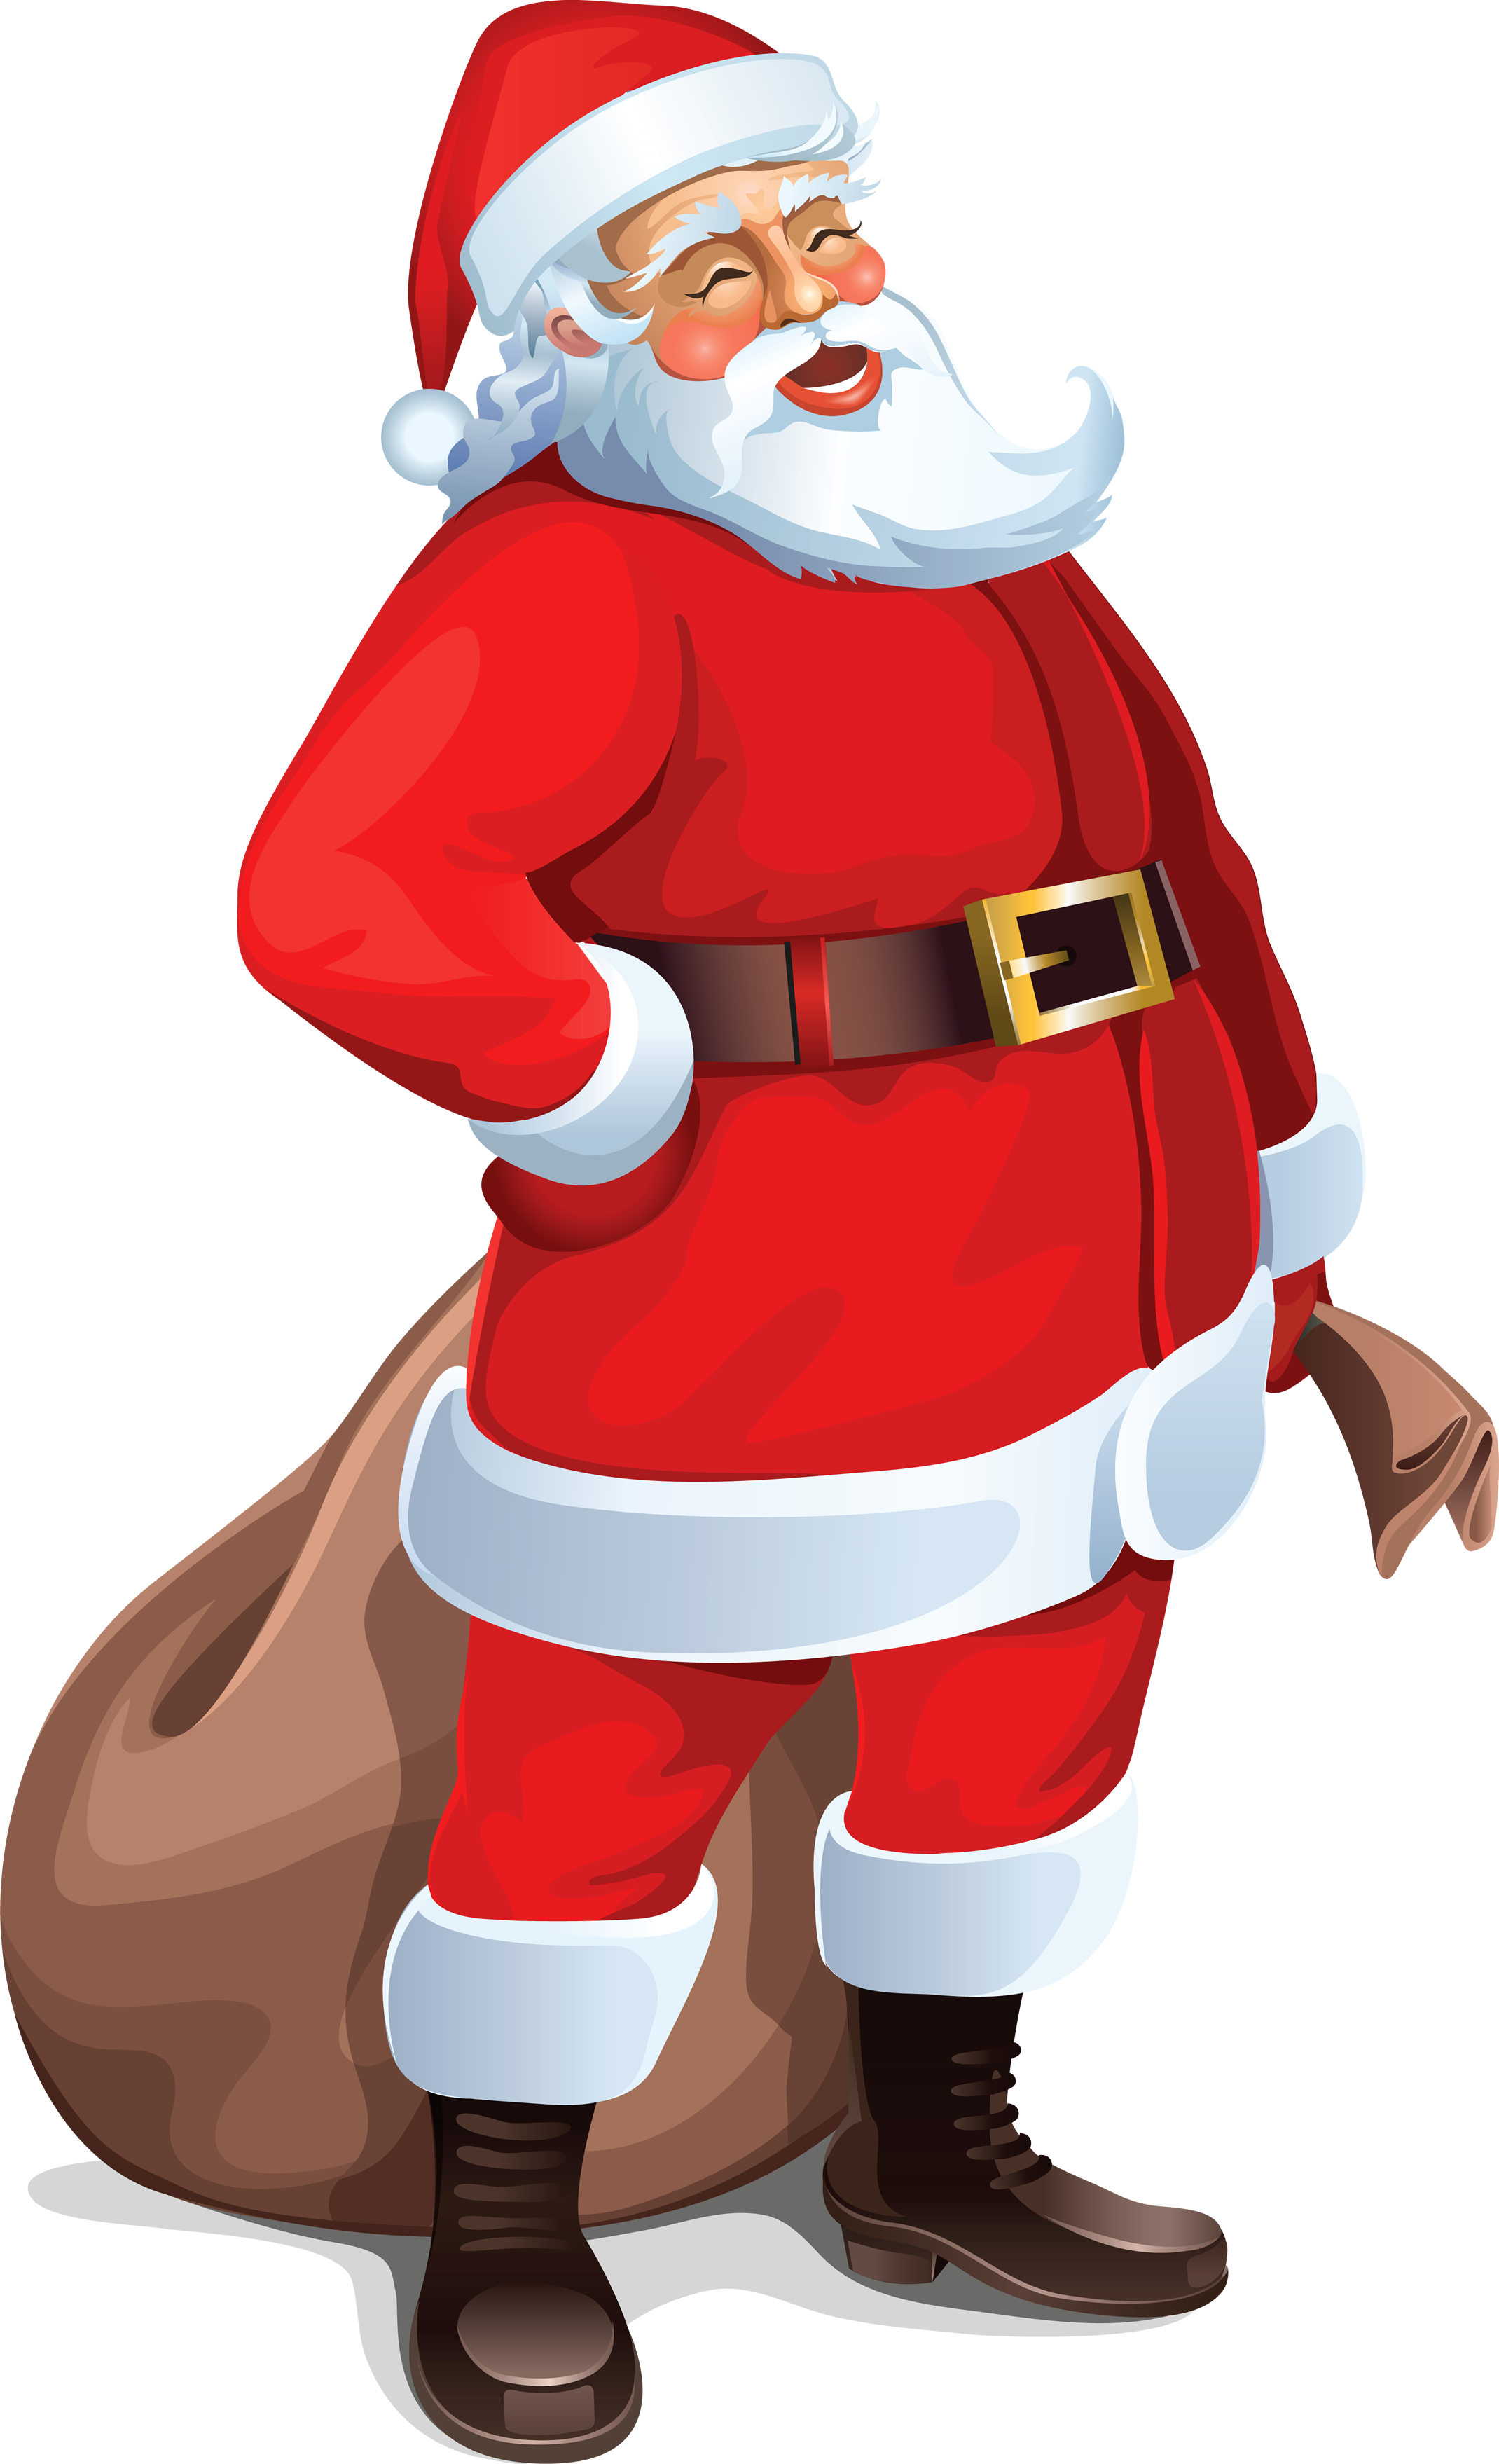 Santa Claus Free Download PNG Image